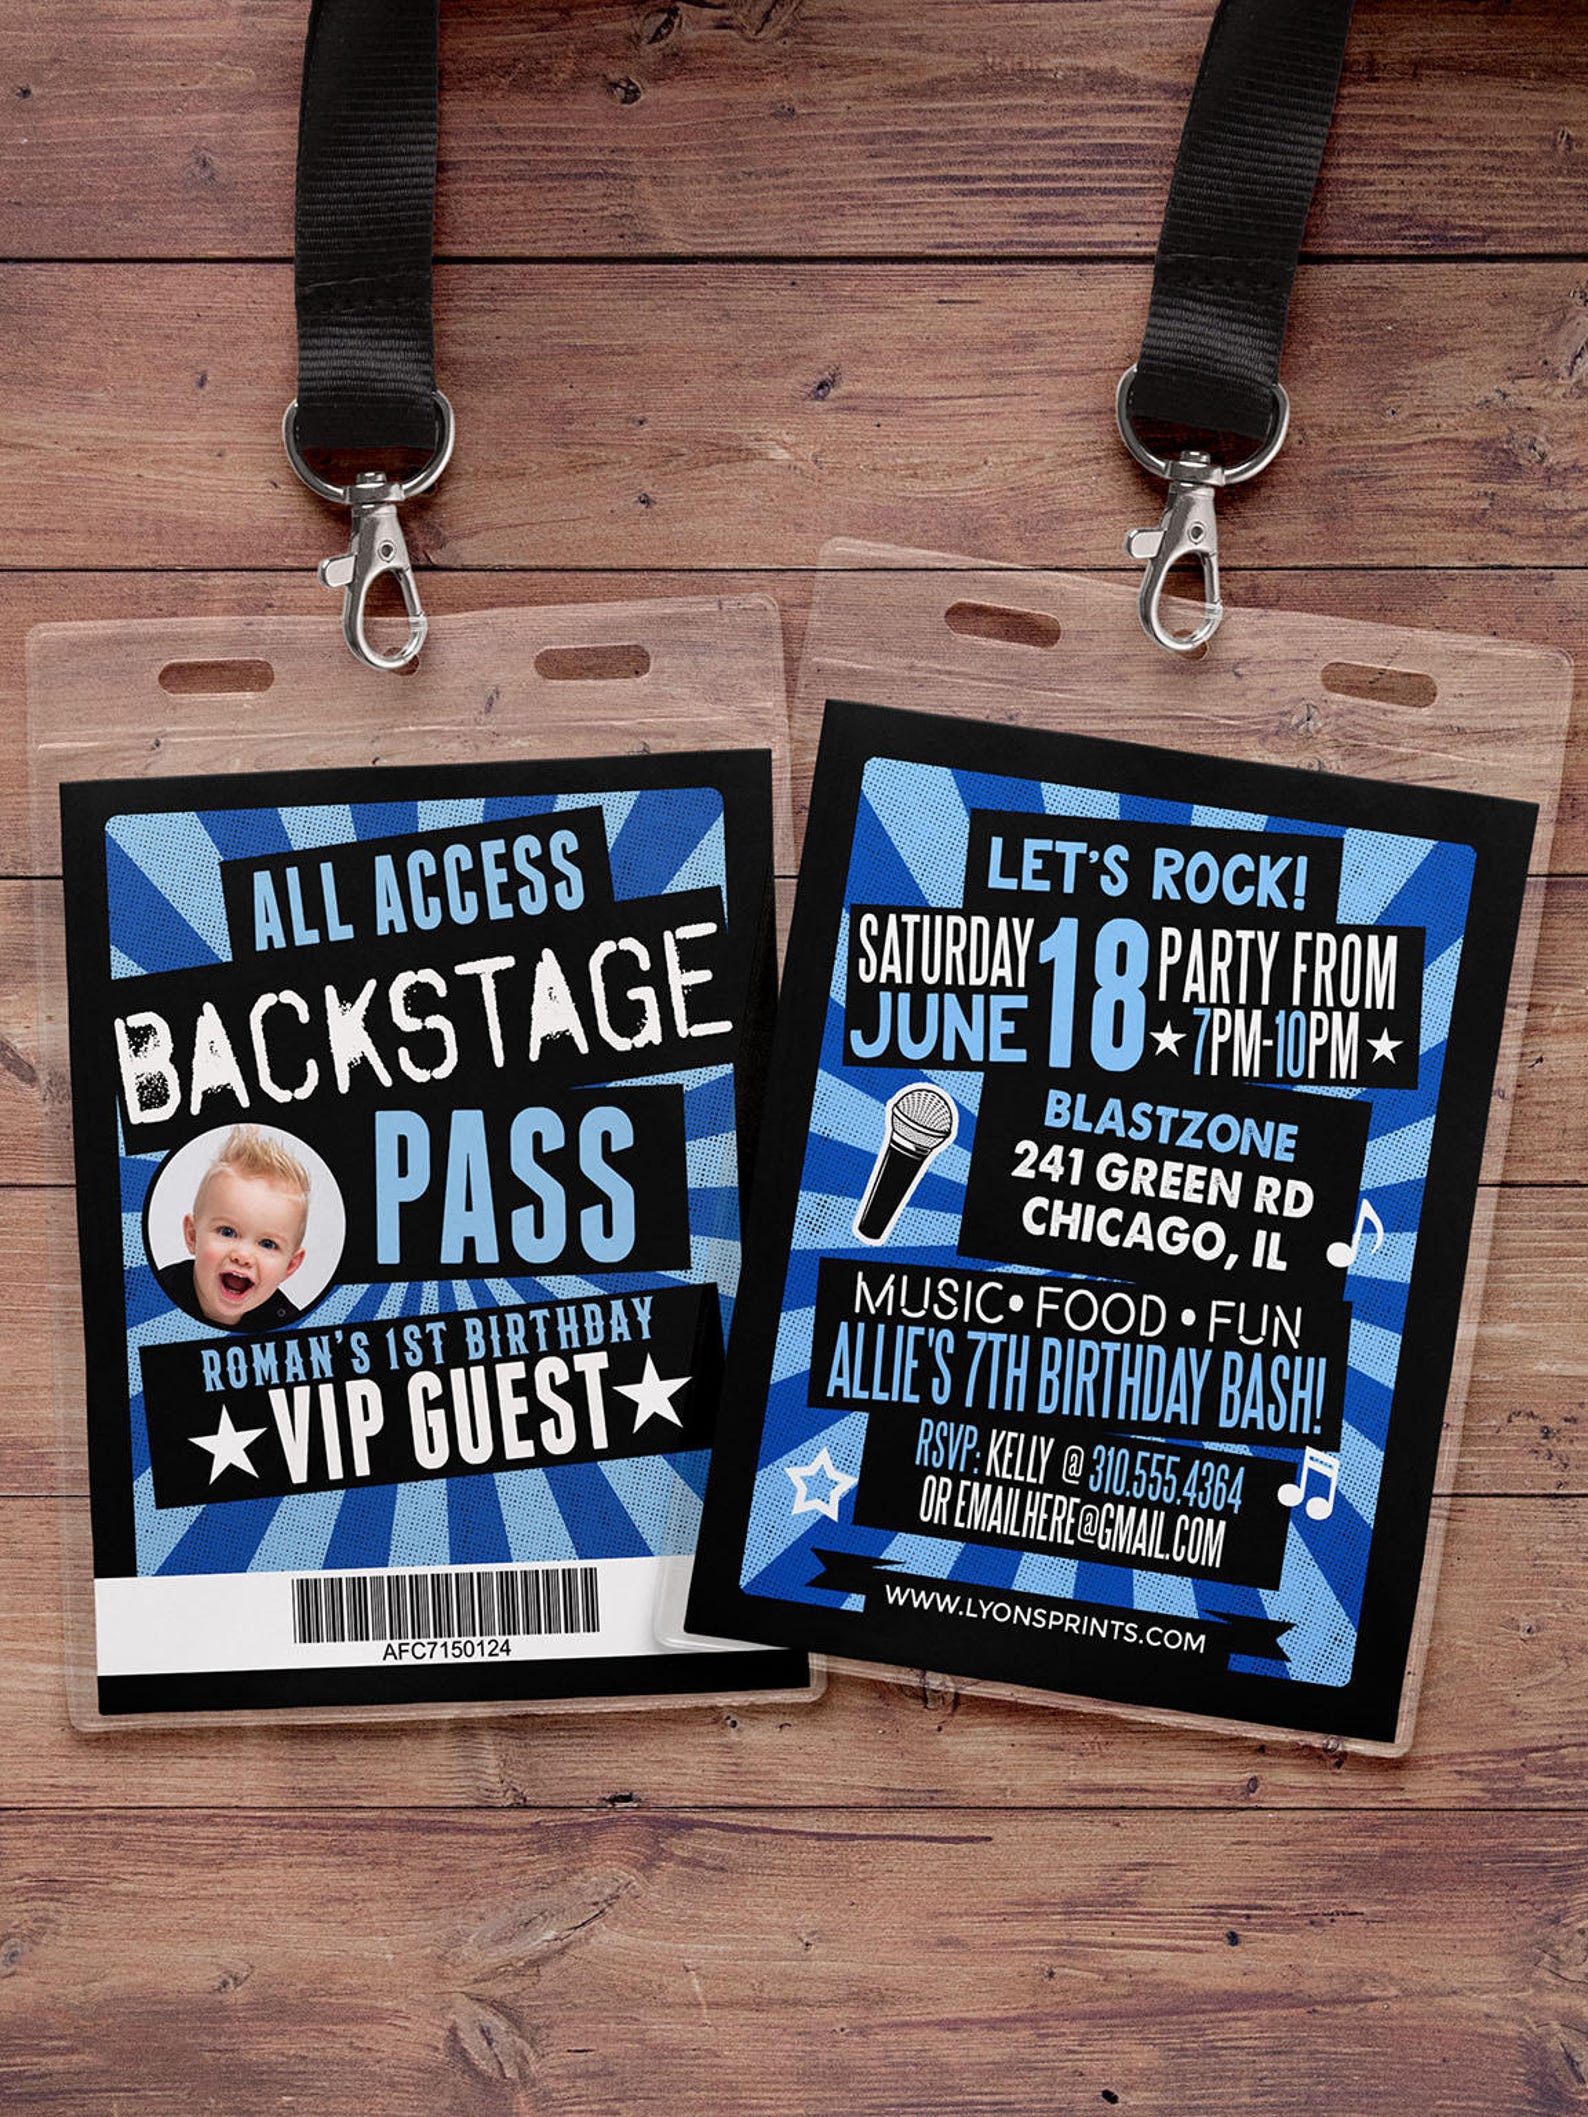 VIP PASS Backstage Pass Concert Ticket Birthday Invitation Etsy